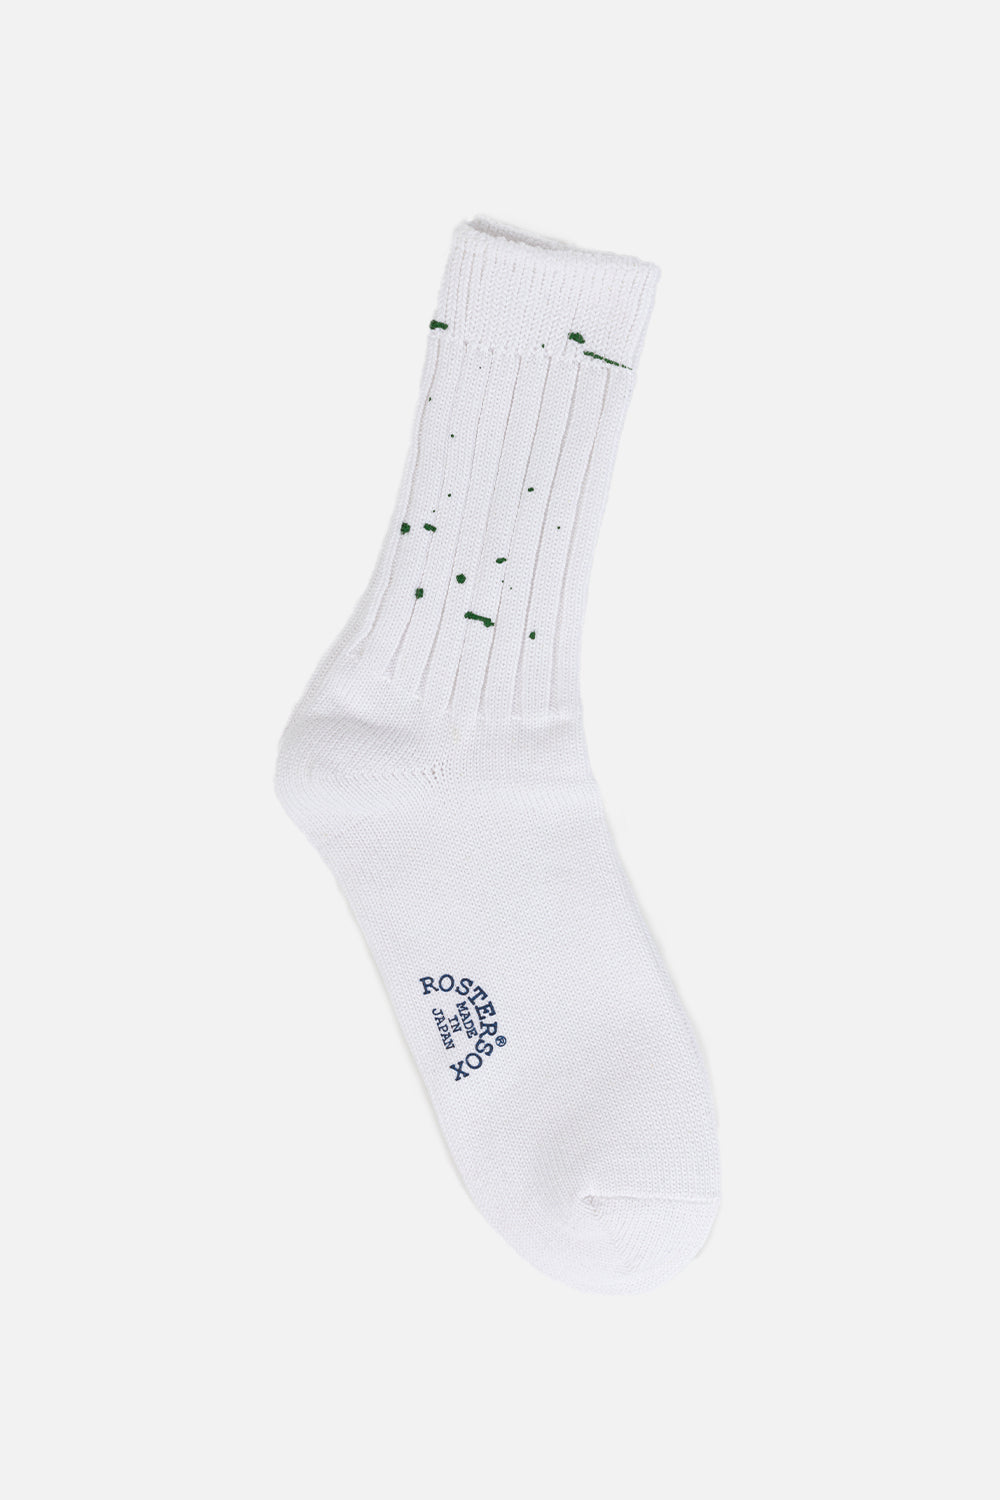 Rostersox-paint-socks-emerald-white